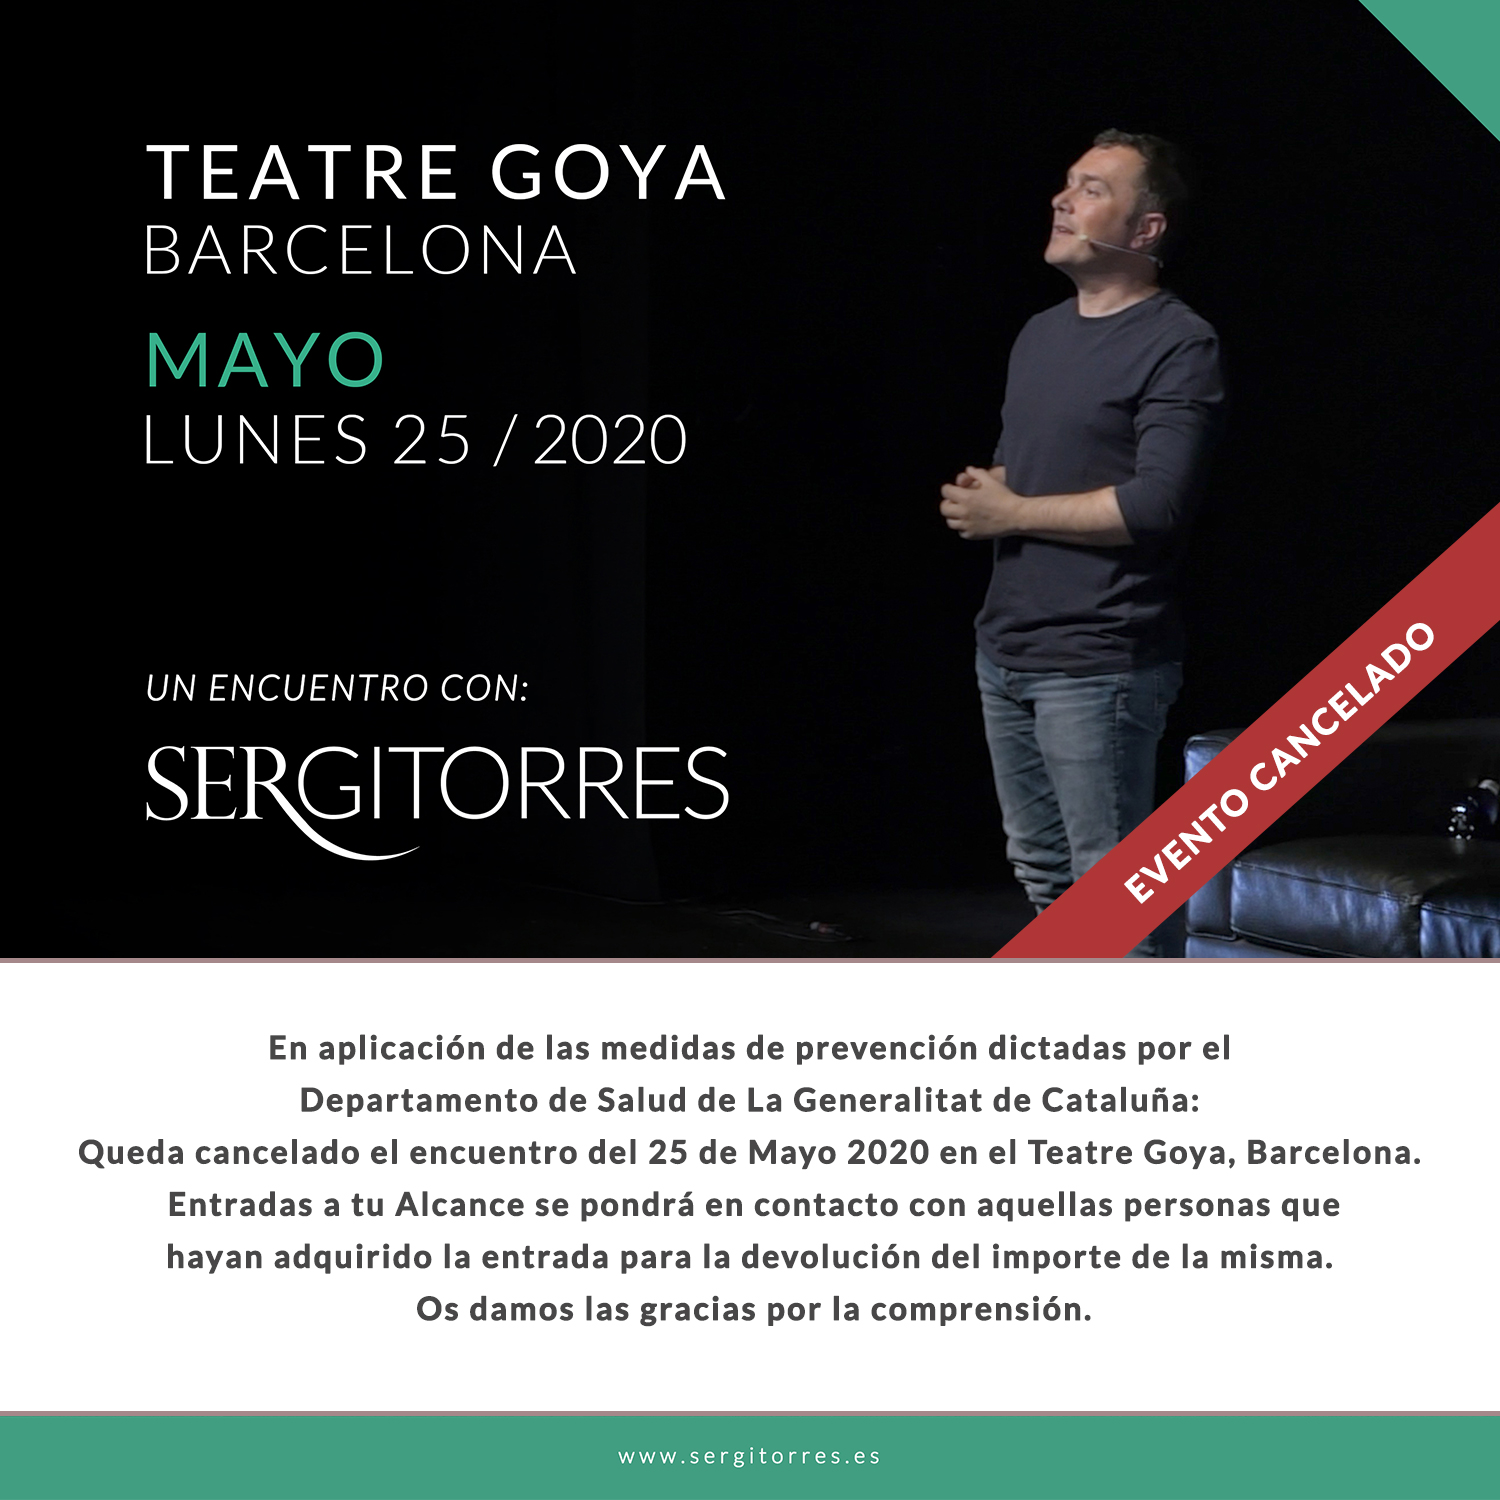 encuentro-con-sergi-torres-en-teatre-goya-bcn-lunes-25-mayo-2020-5e9dcb6e7dc2f.jpeg